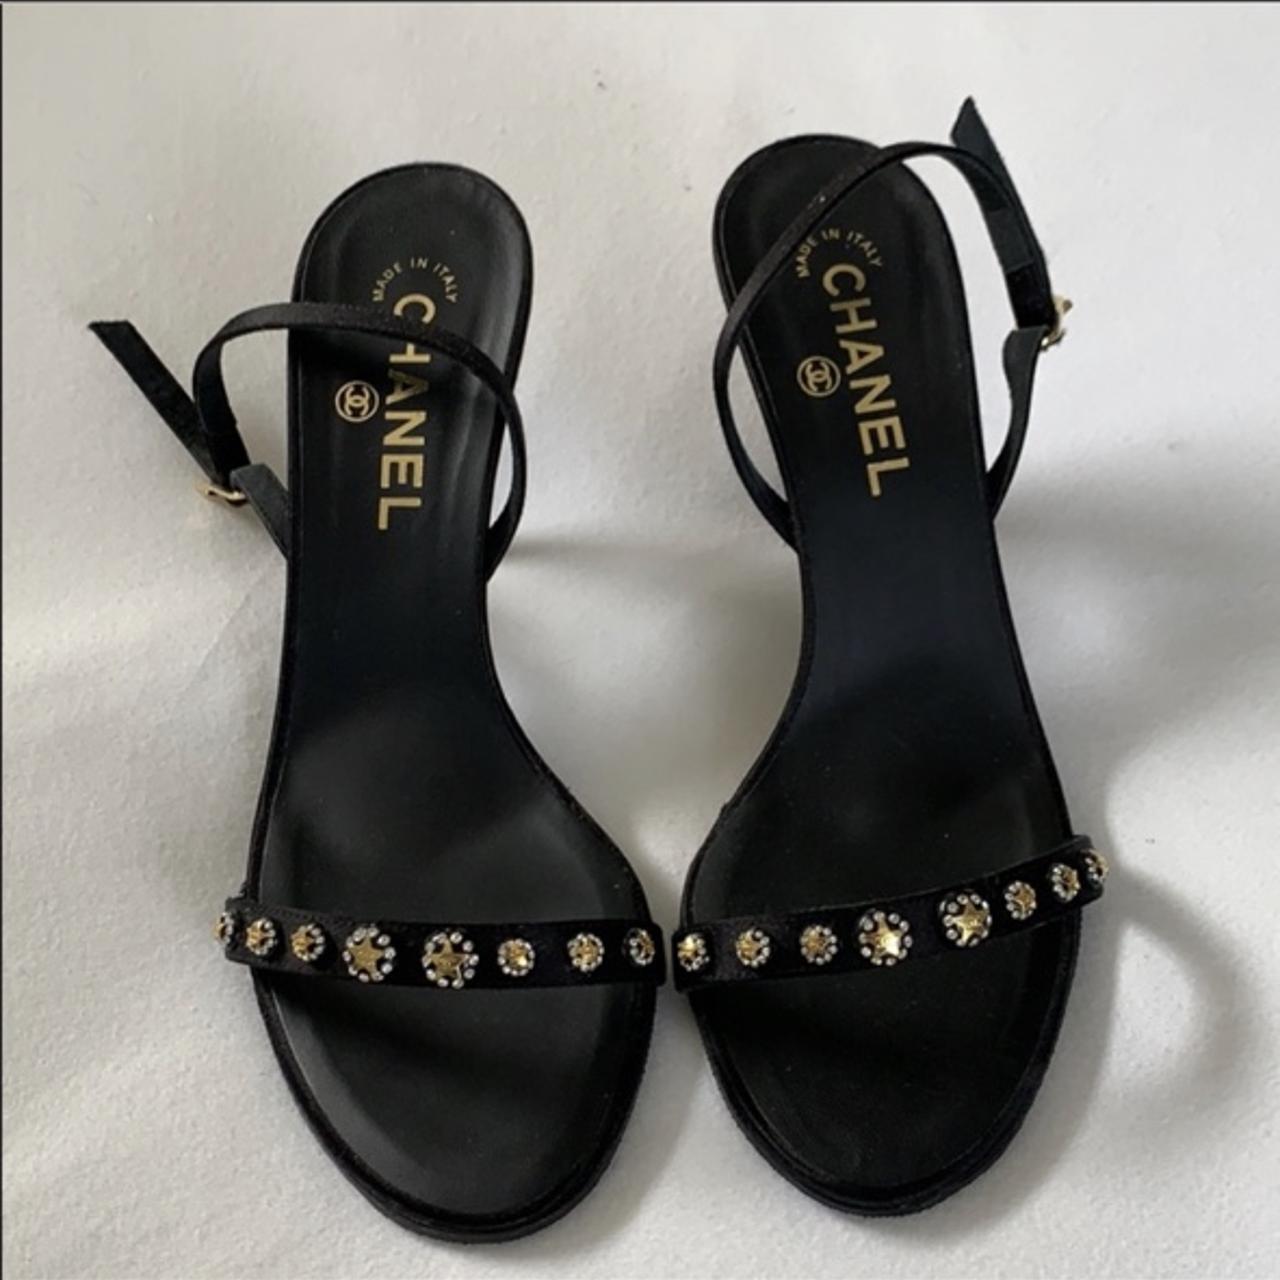 Chanel black star heels #chanel #heels #starshoes - Depop